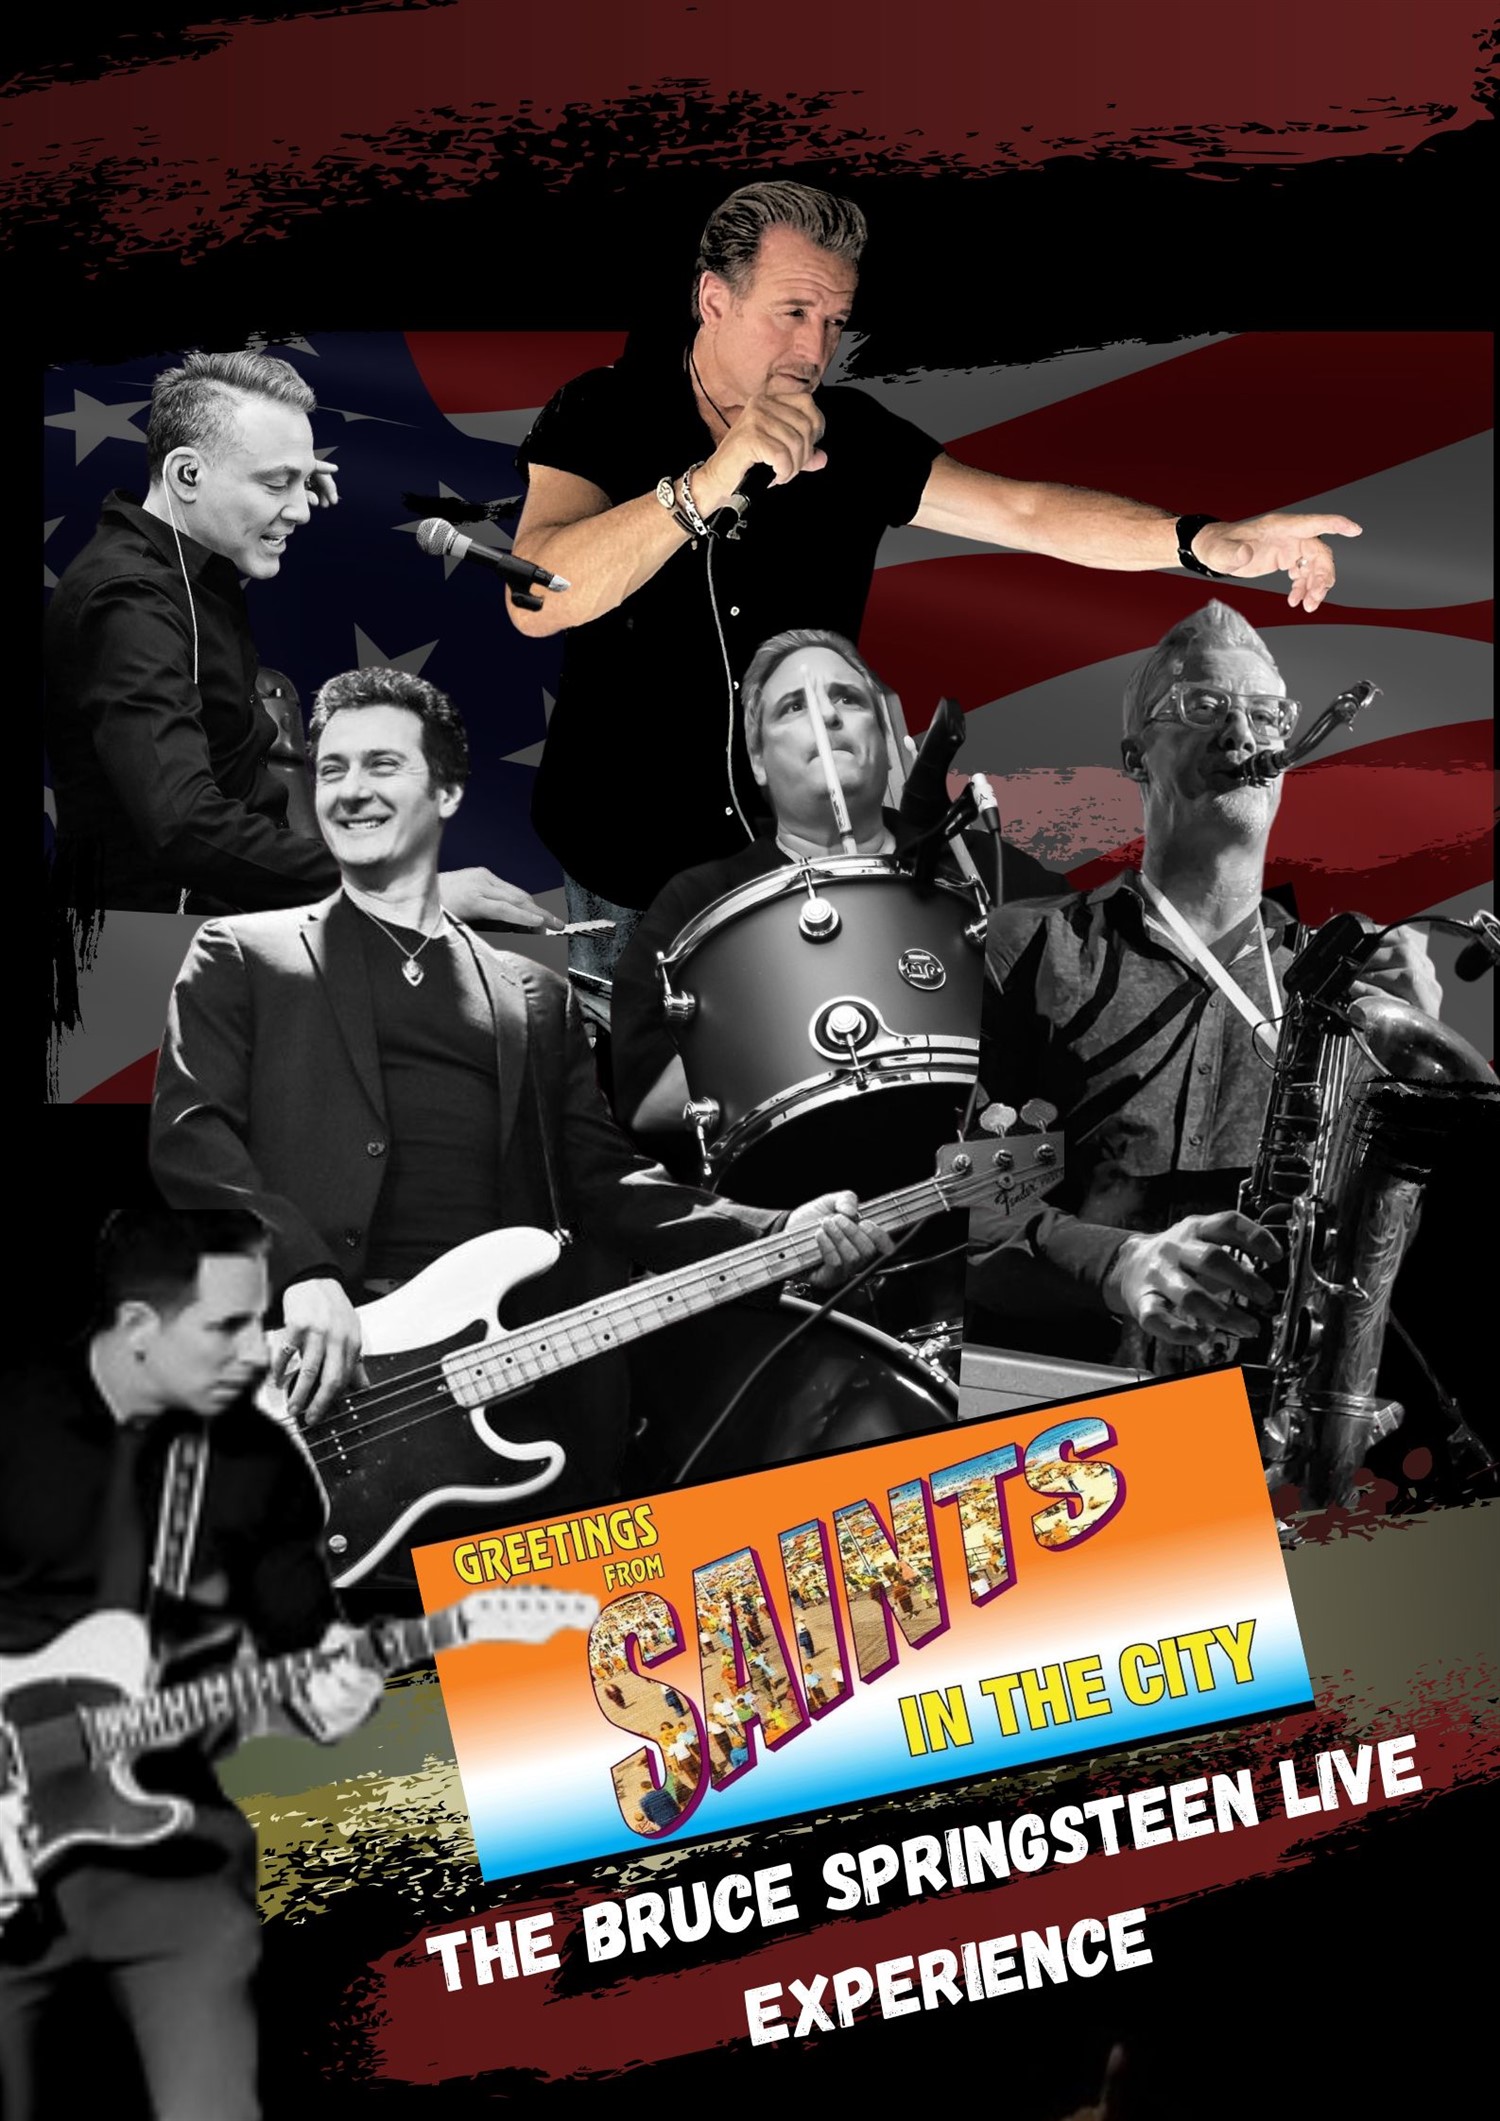 Saints in the City The Bruce Springsteen Live Experience on ene. 05, 15:00@Yorktown Stage 2023 - Elegir asientoCompra entradas y obtén información enYorktown Stage 